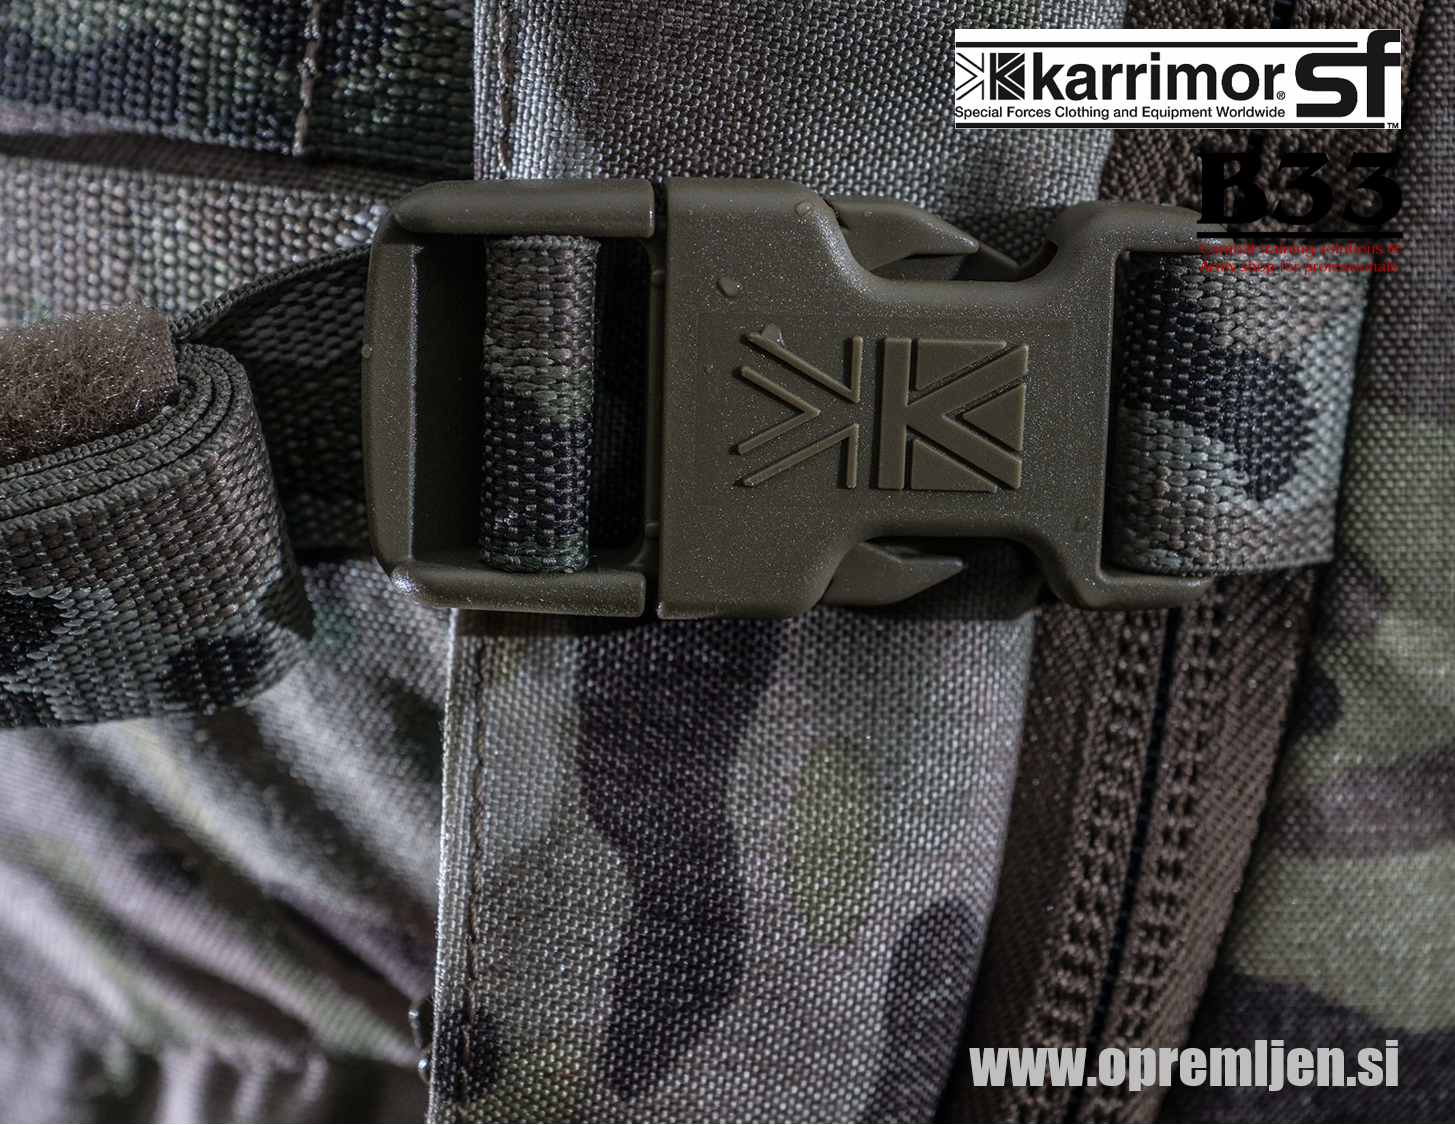 B33 army shop - Karrimor SF vojaški nahrbtniki by B33 army shop at www.opremljen.si, trgovina z vojaško opremo, vojaška trgovina